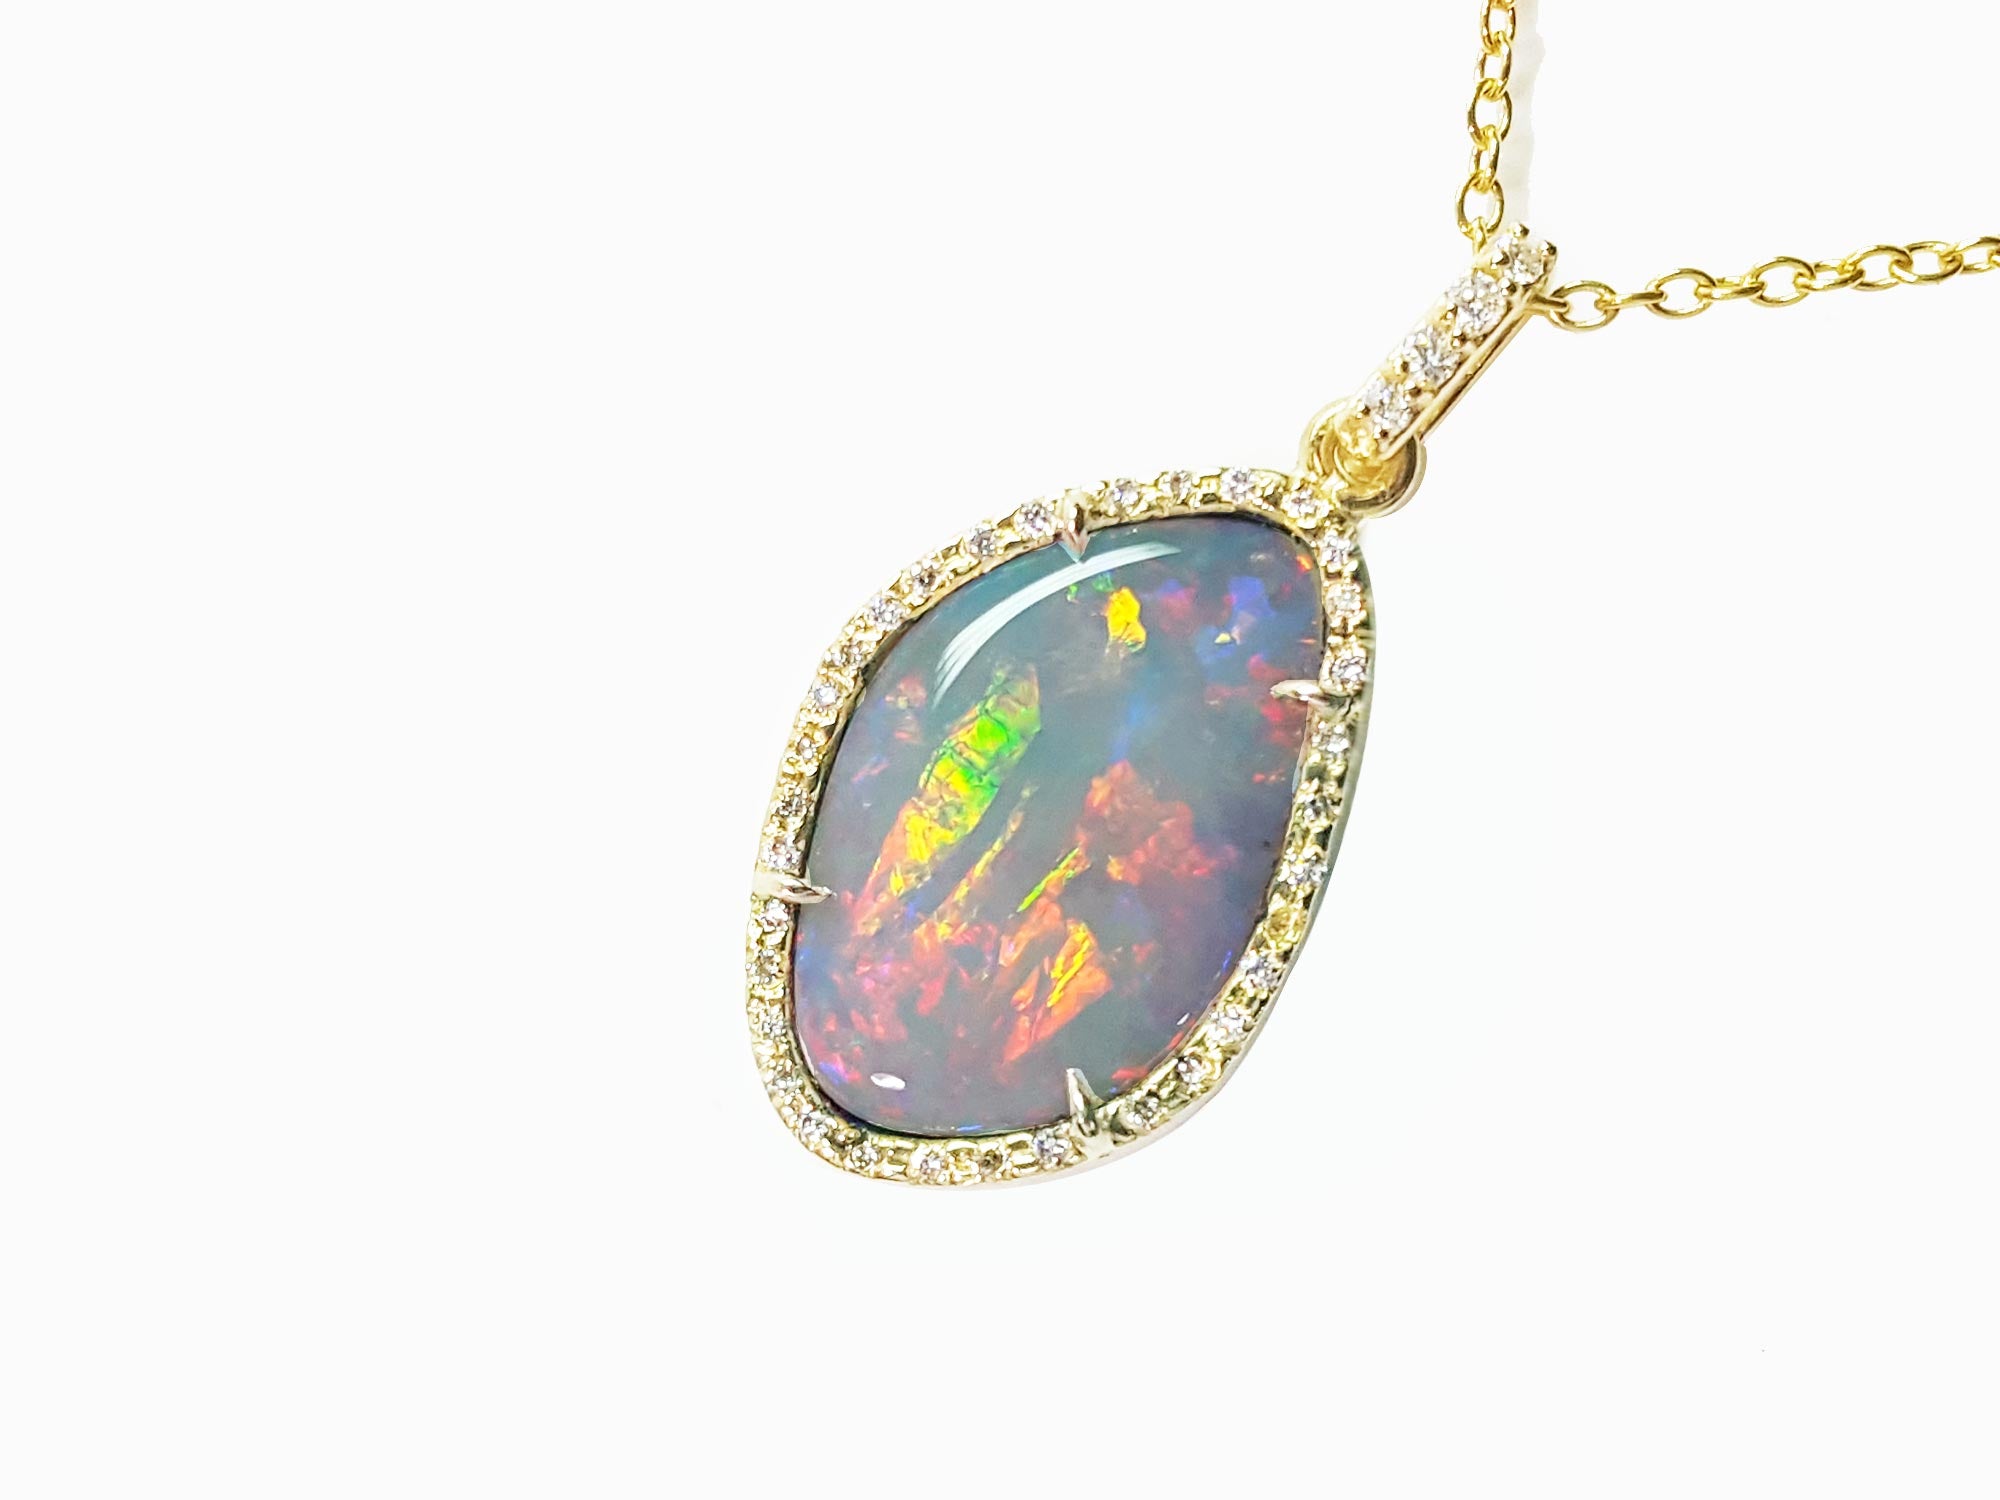 Natural Australian opal necklace